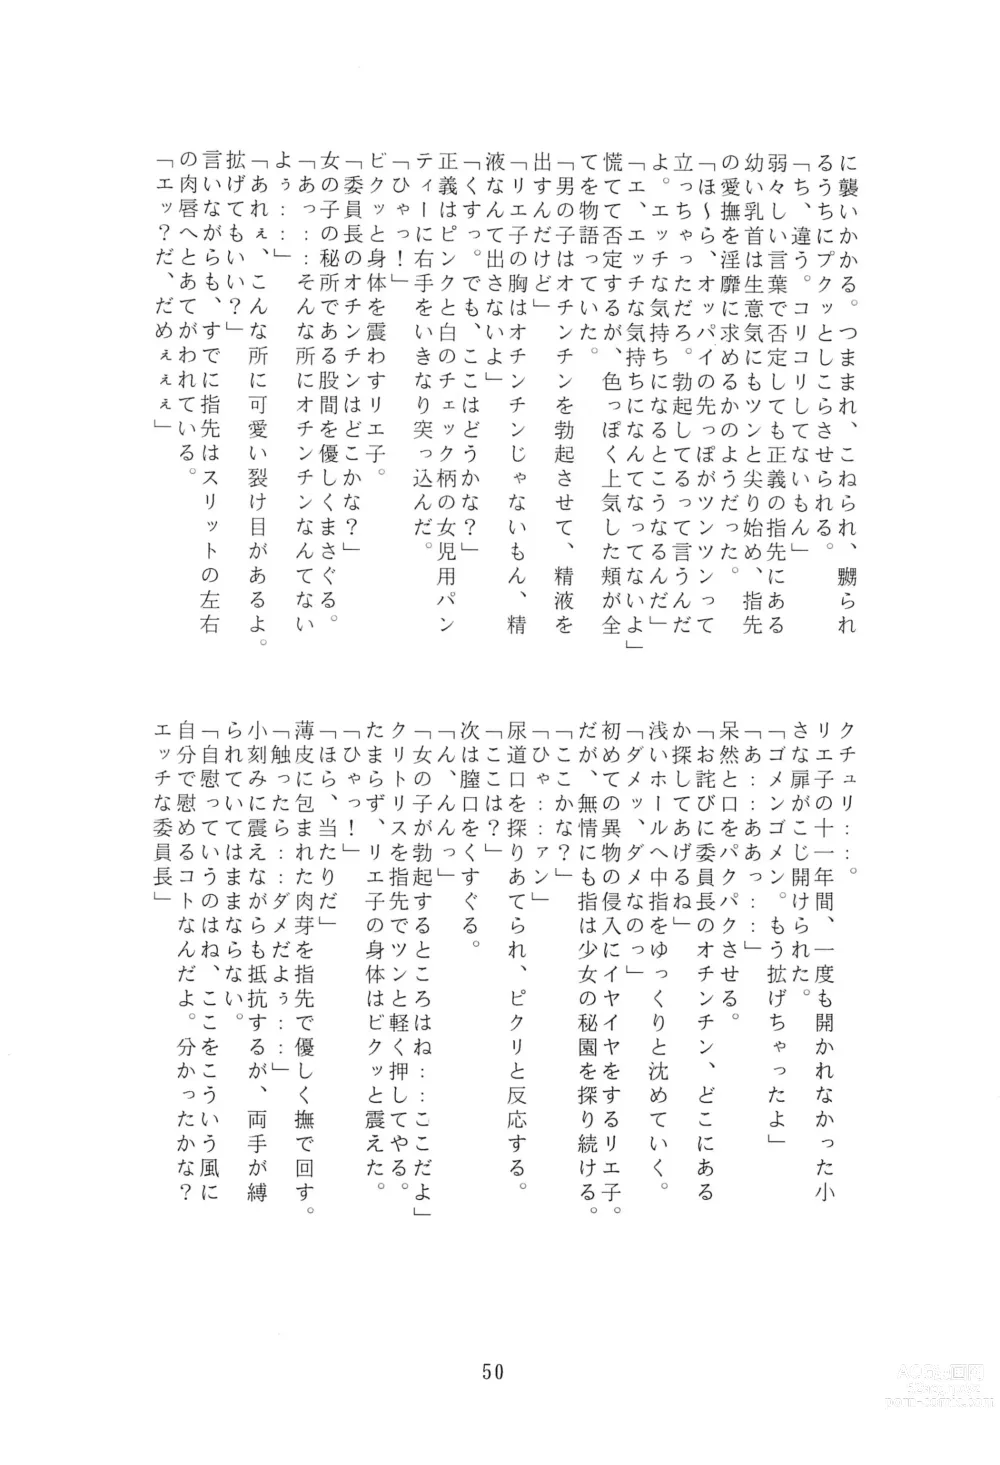 Page 50 of doujinshi JANGLE ONI Mermaid